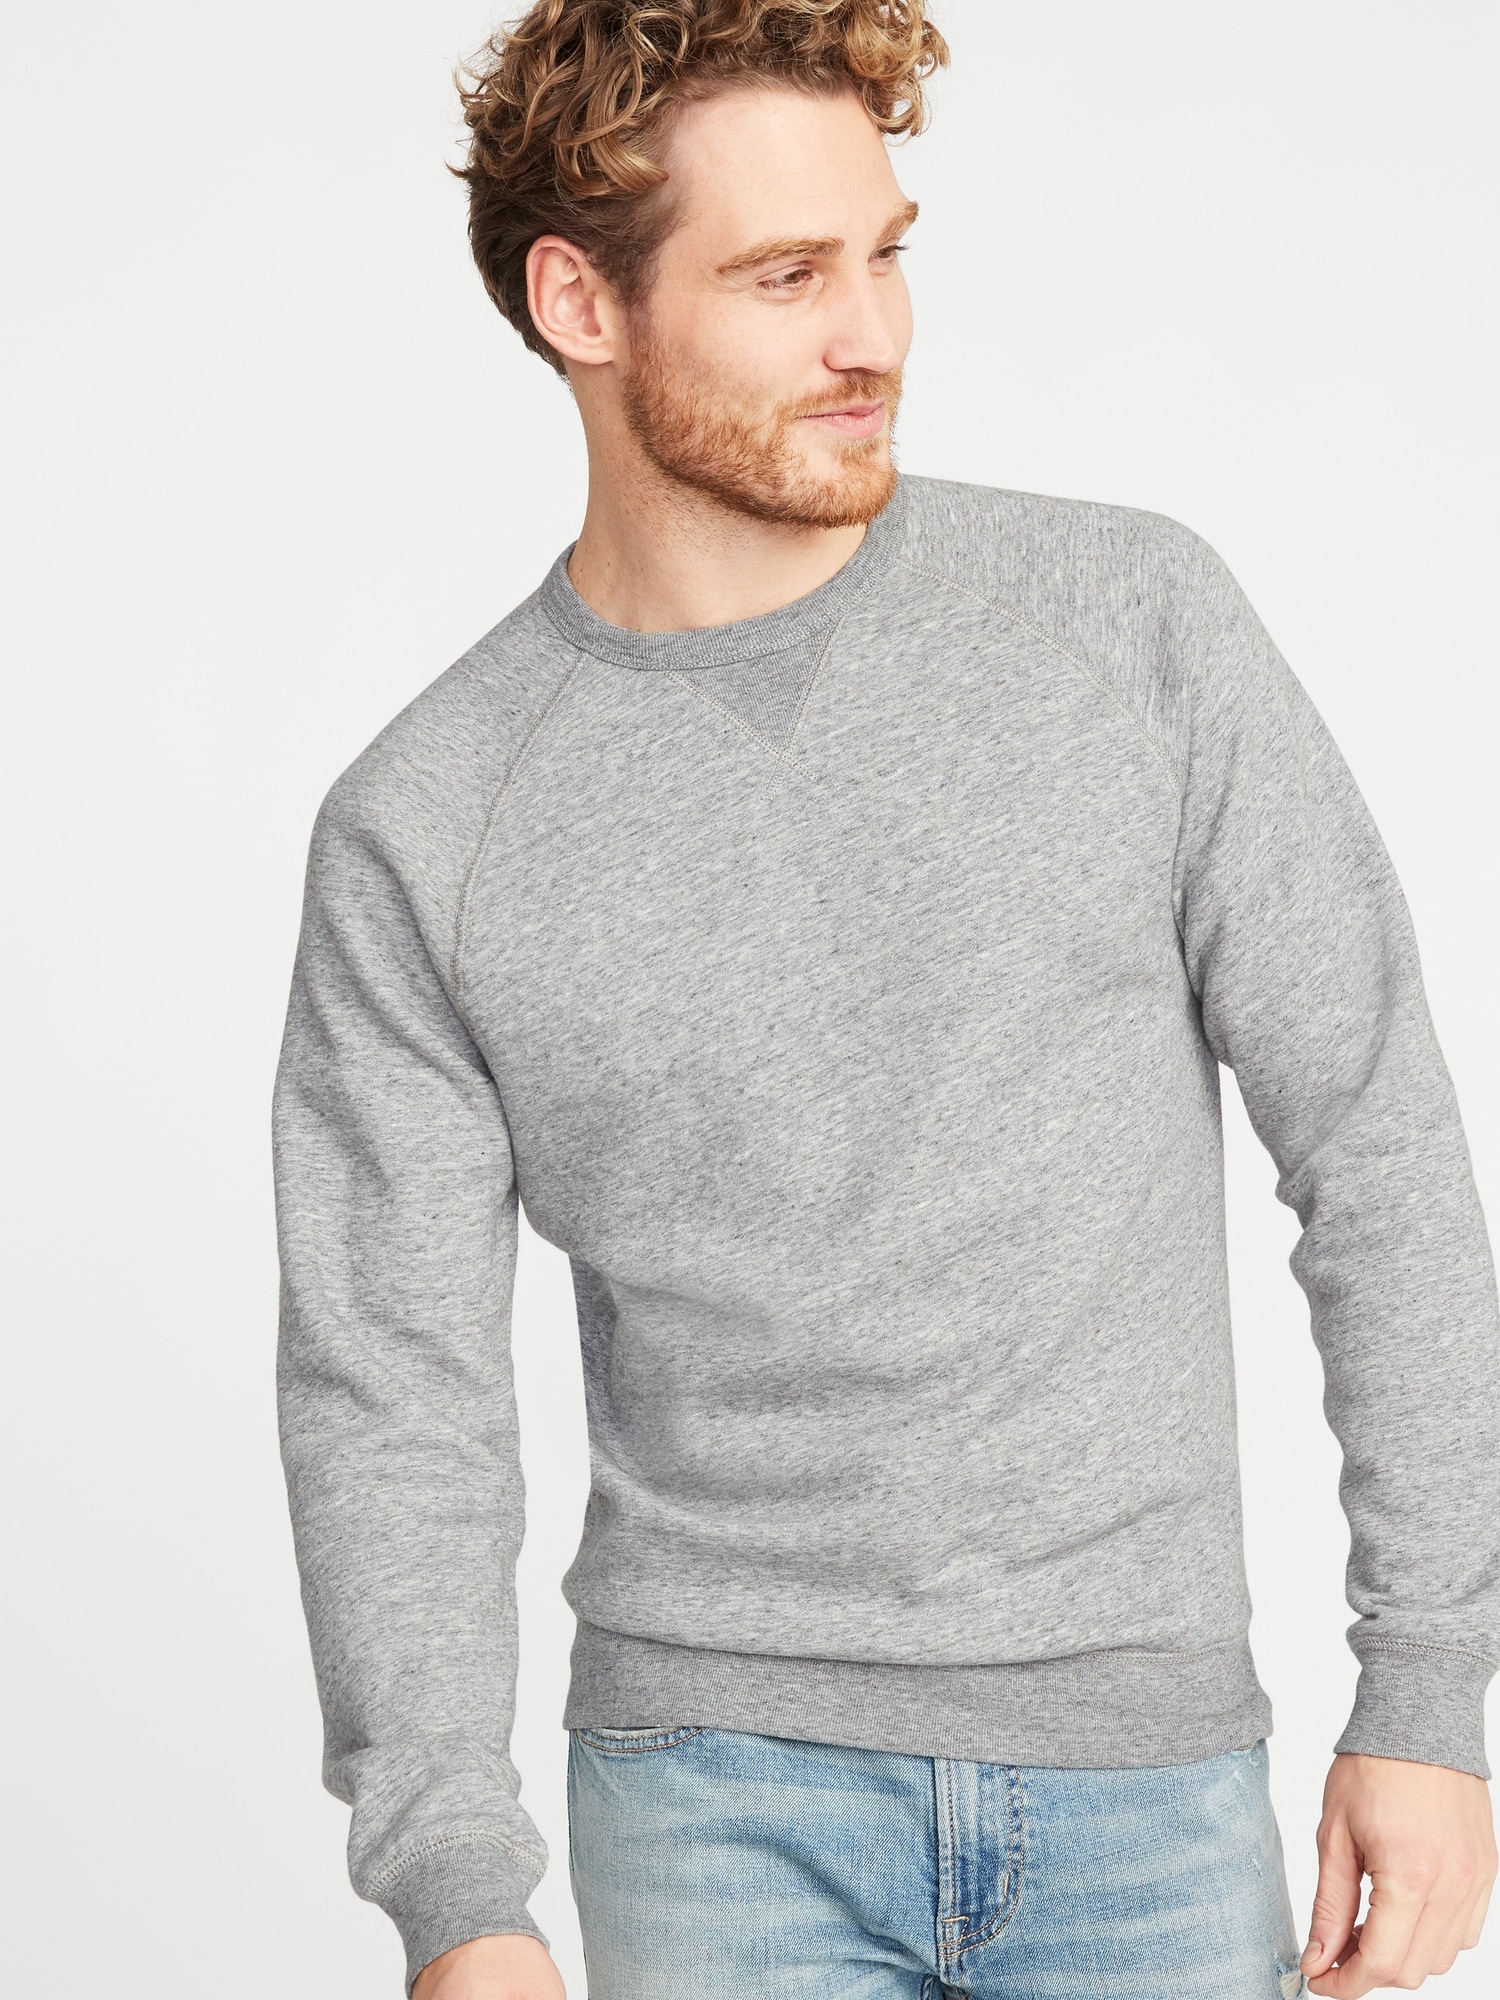 mens short sleeve fleece sweatshirts